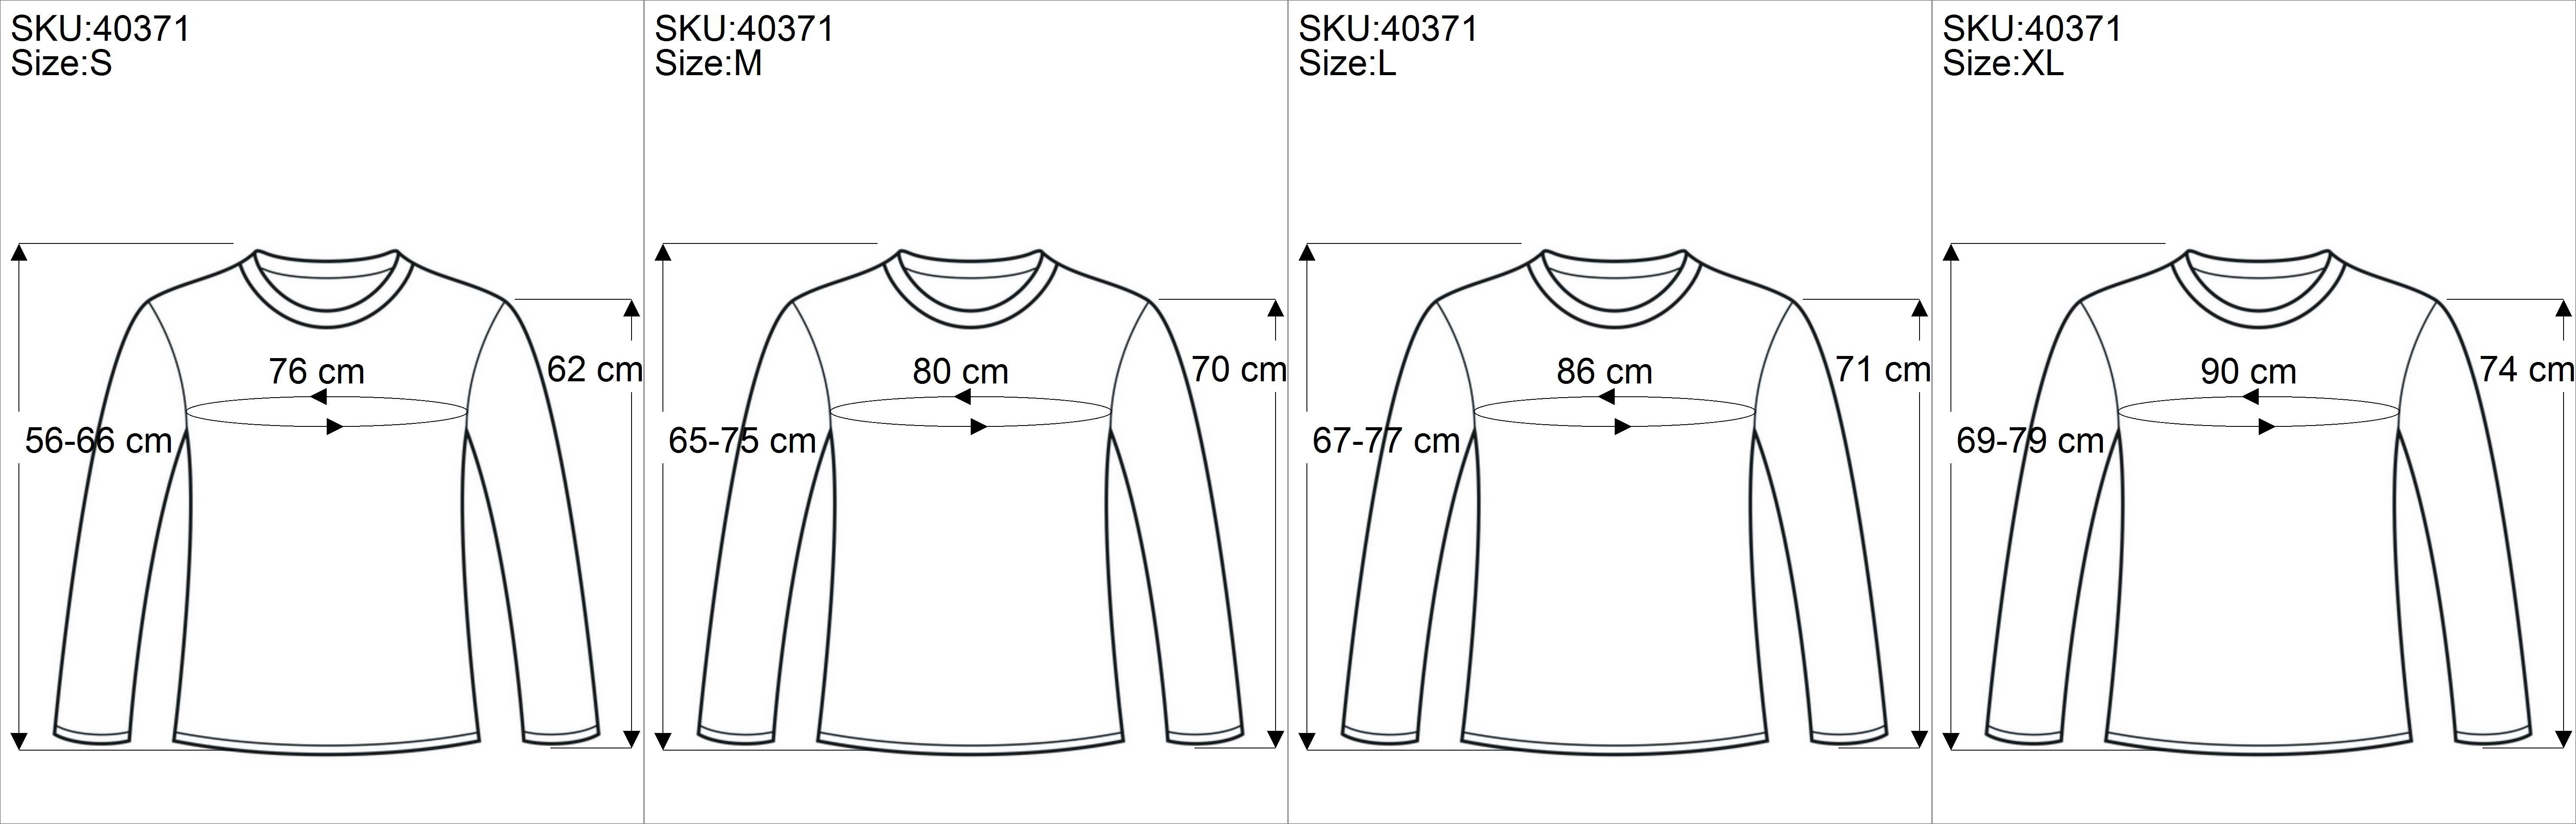 Bio-Baumwolle, Boho Bekleidung Longshirt alternative Longsleeve Guru-Shop olivgrün aus Shirt..